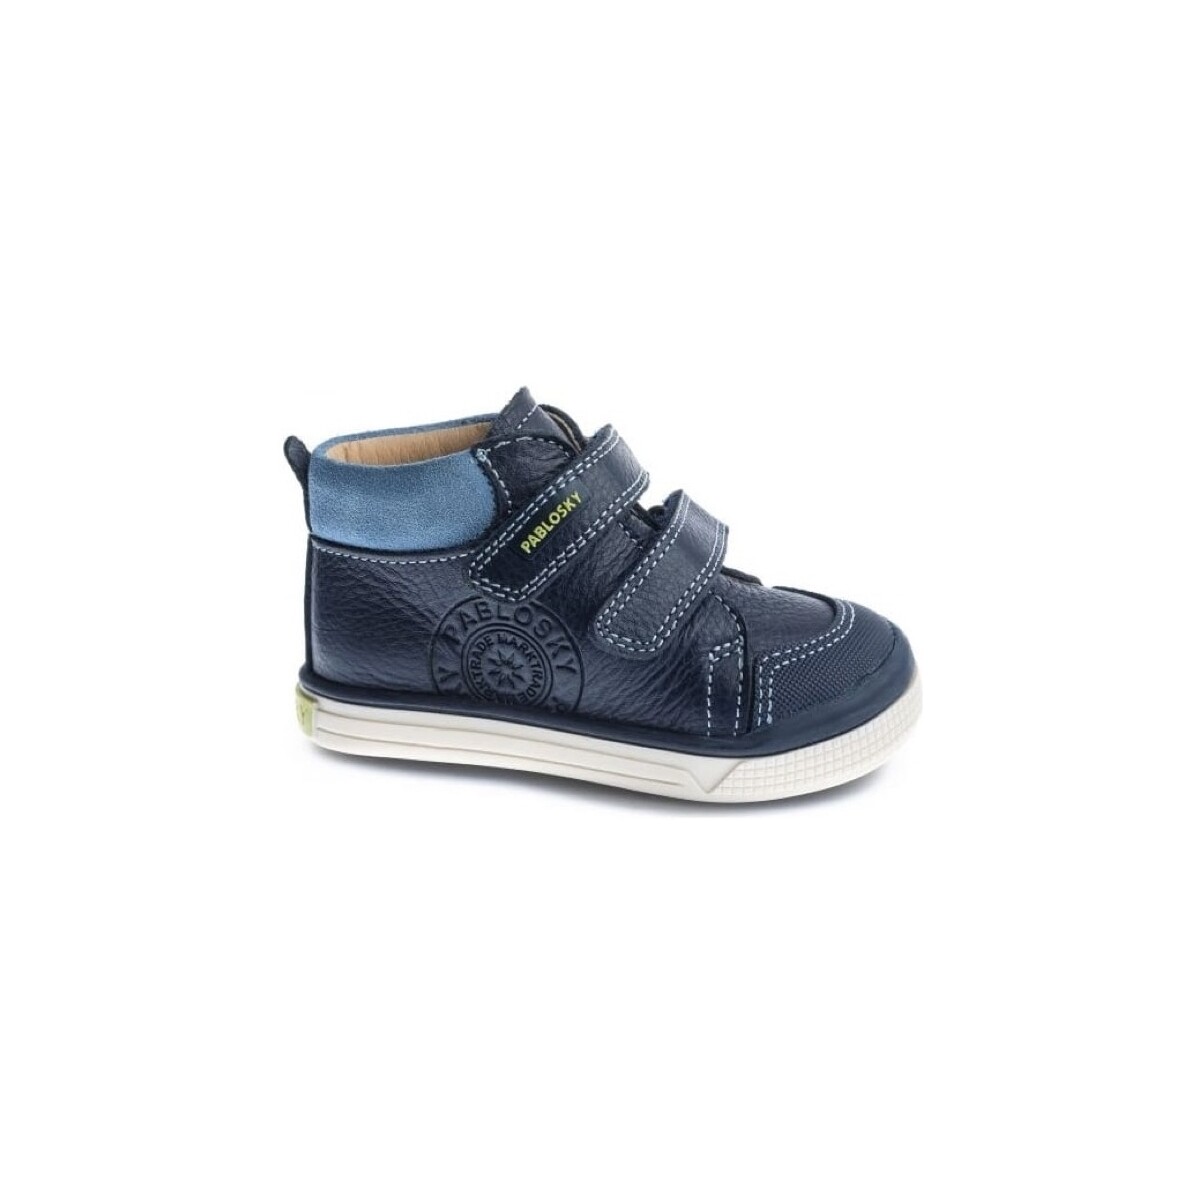 Sneakers Pablosky Baby 035420 K – Niagara Oceano